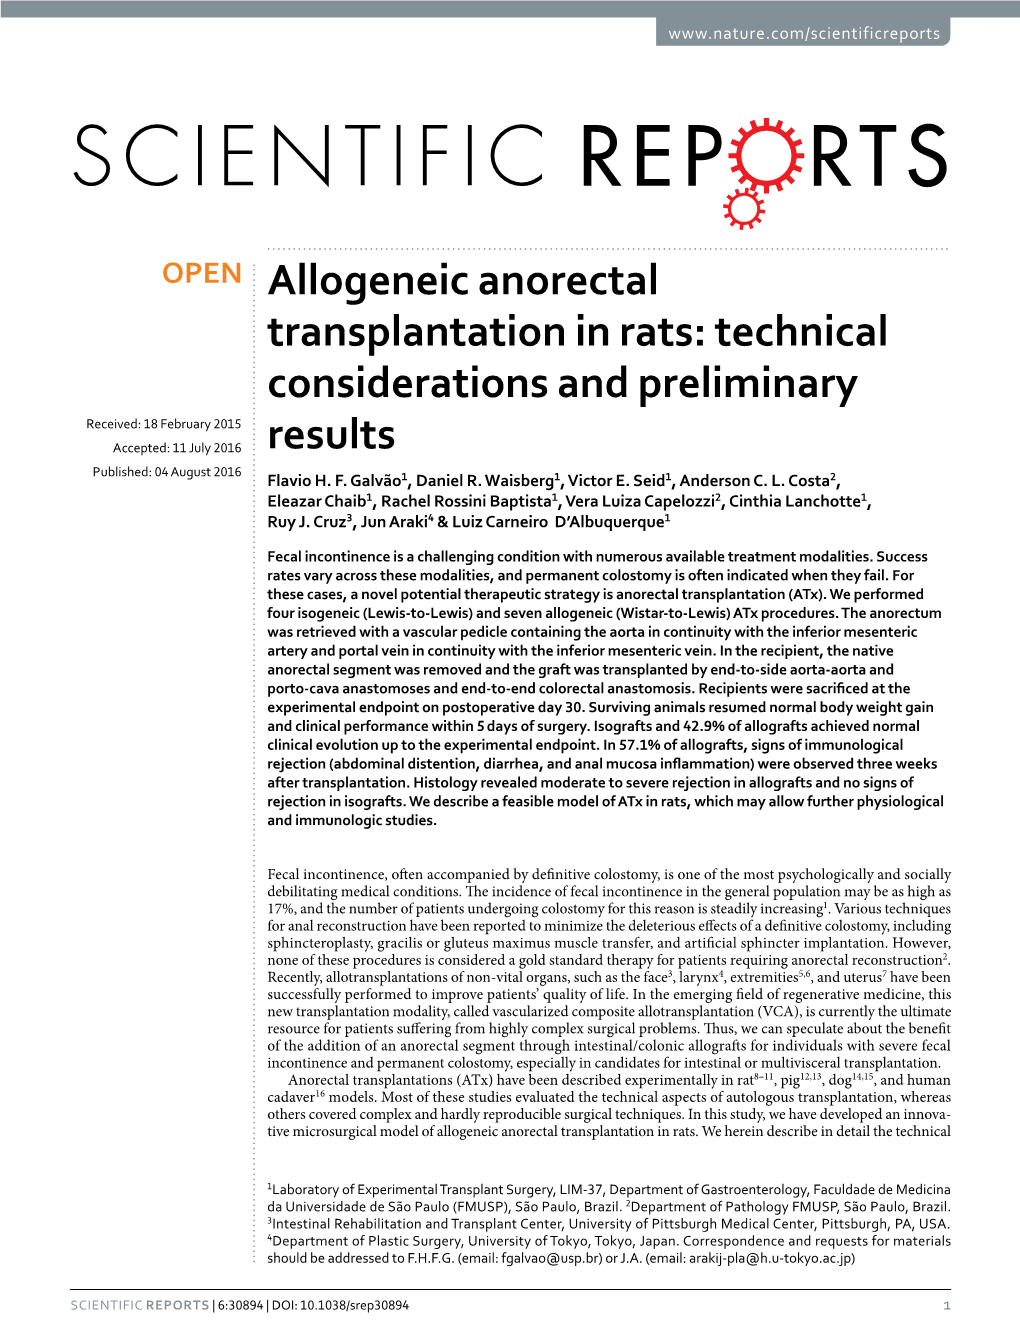 Allogeneic Anorectal Transplantation in Rats